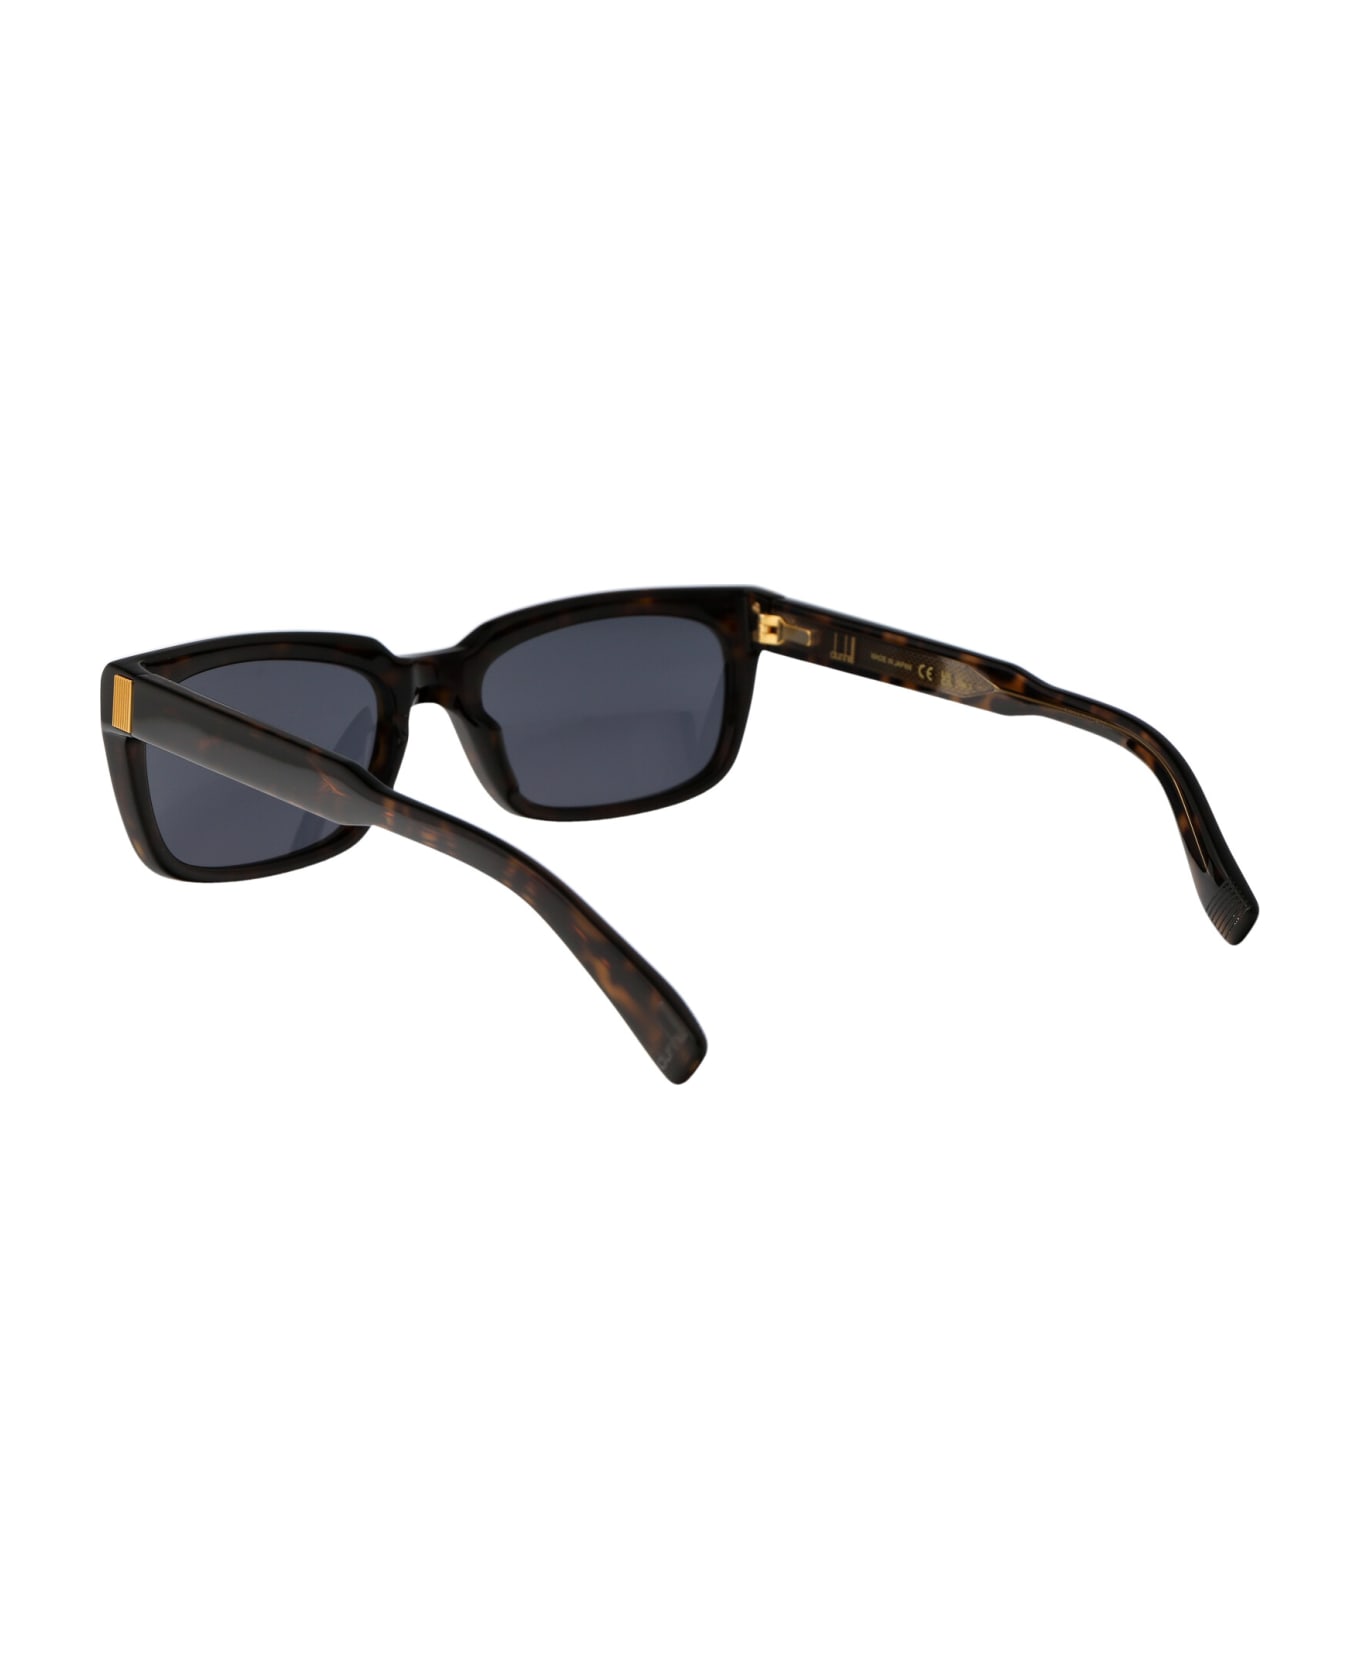 Dunhill Du0056s Sunglasses - 002 HAVANA HAVANA GREY